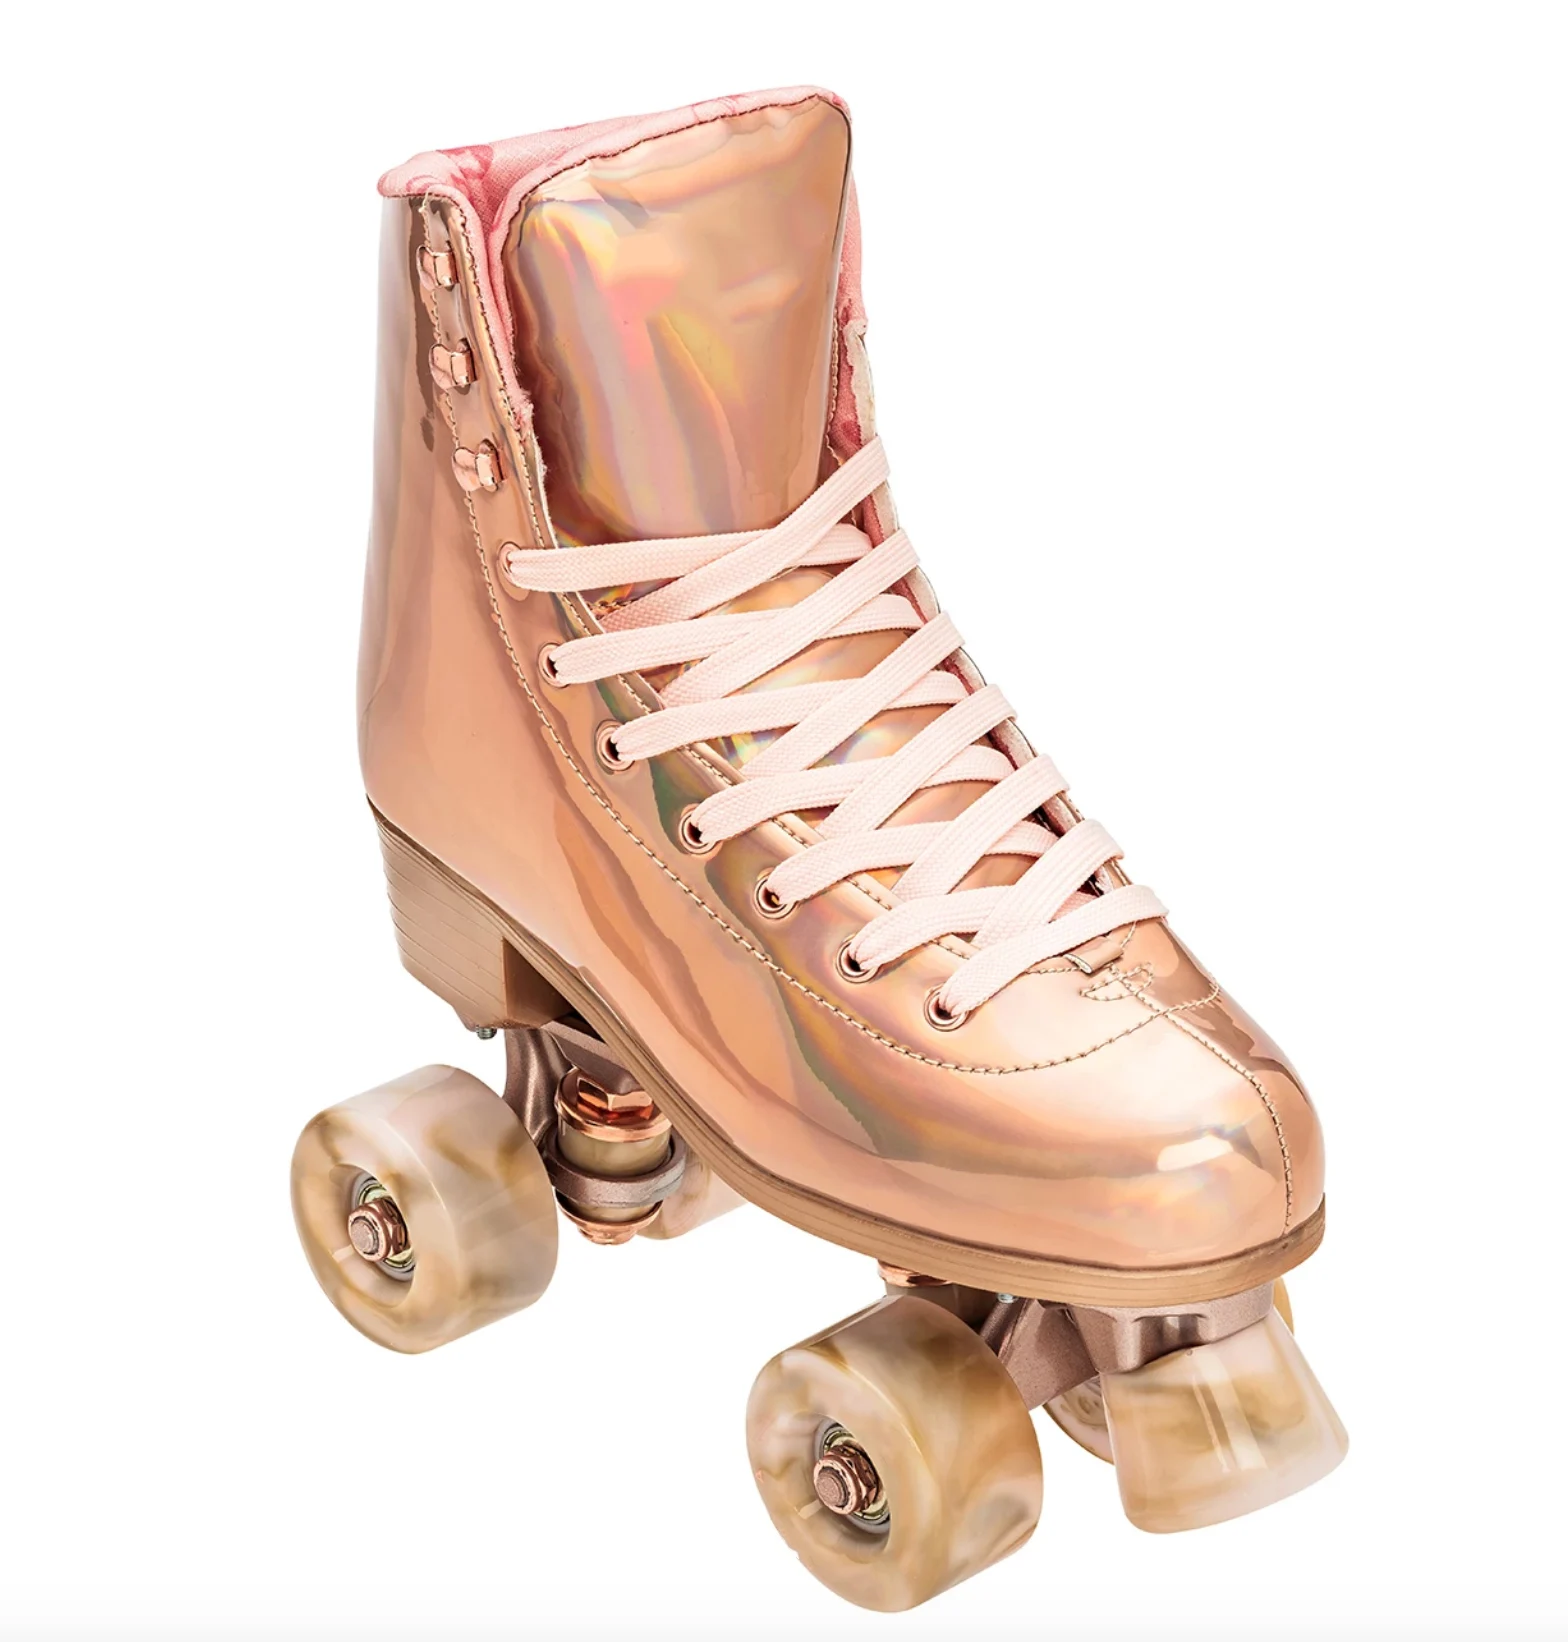 

Hot Selling Cheap 4 Wheel quad Roller Skates shoes aluminum bracket mens Woman Flashing Roller For Adult Broad skate board